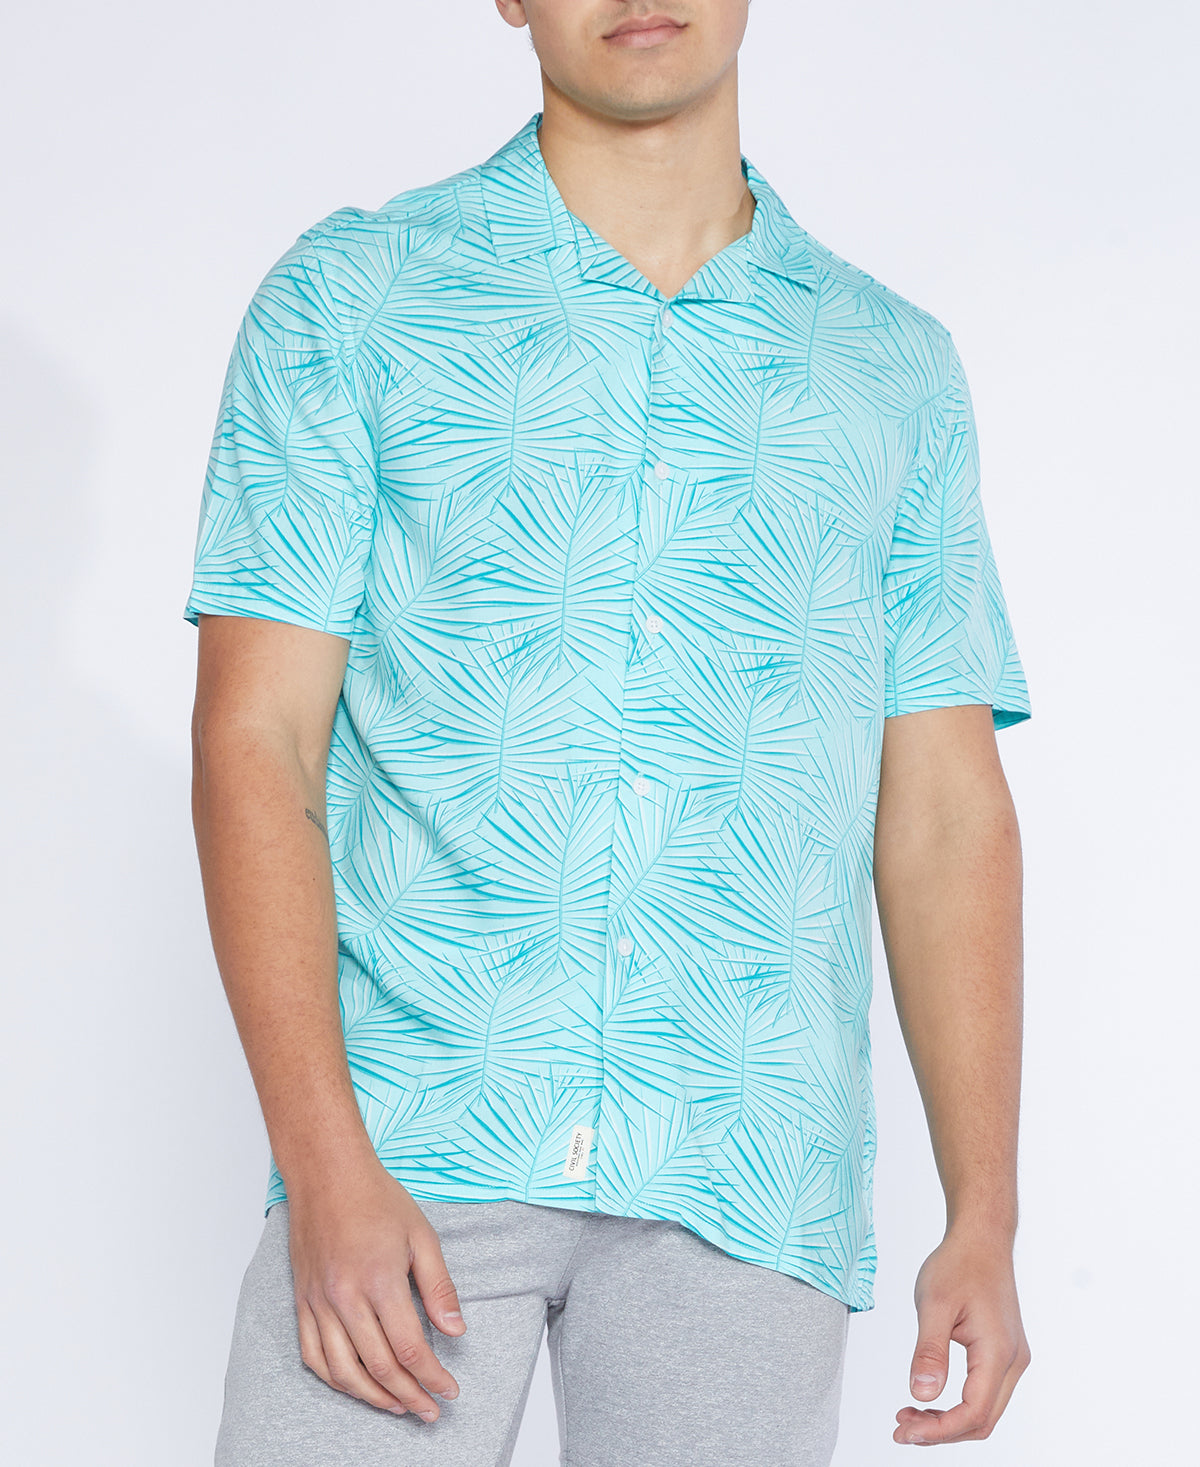 Frond Printed Resort CIVIL – SOCIETY Shirt (Turquoise)